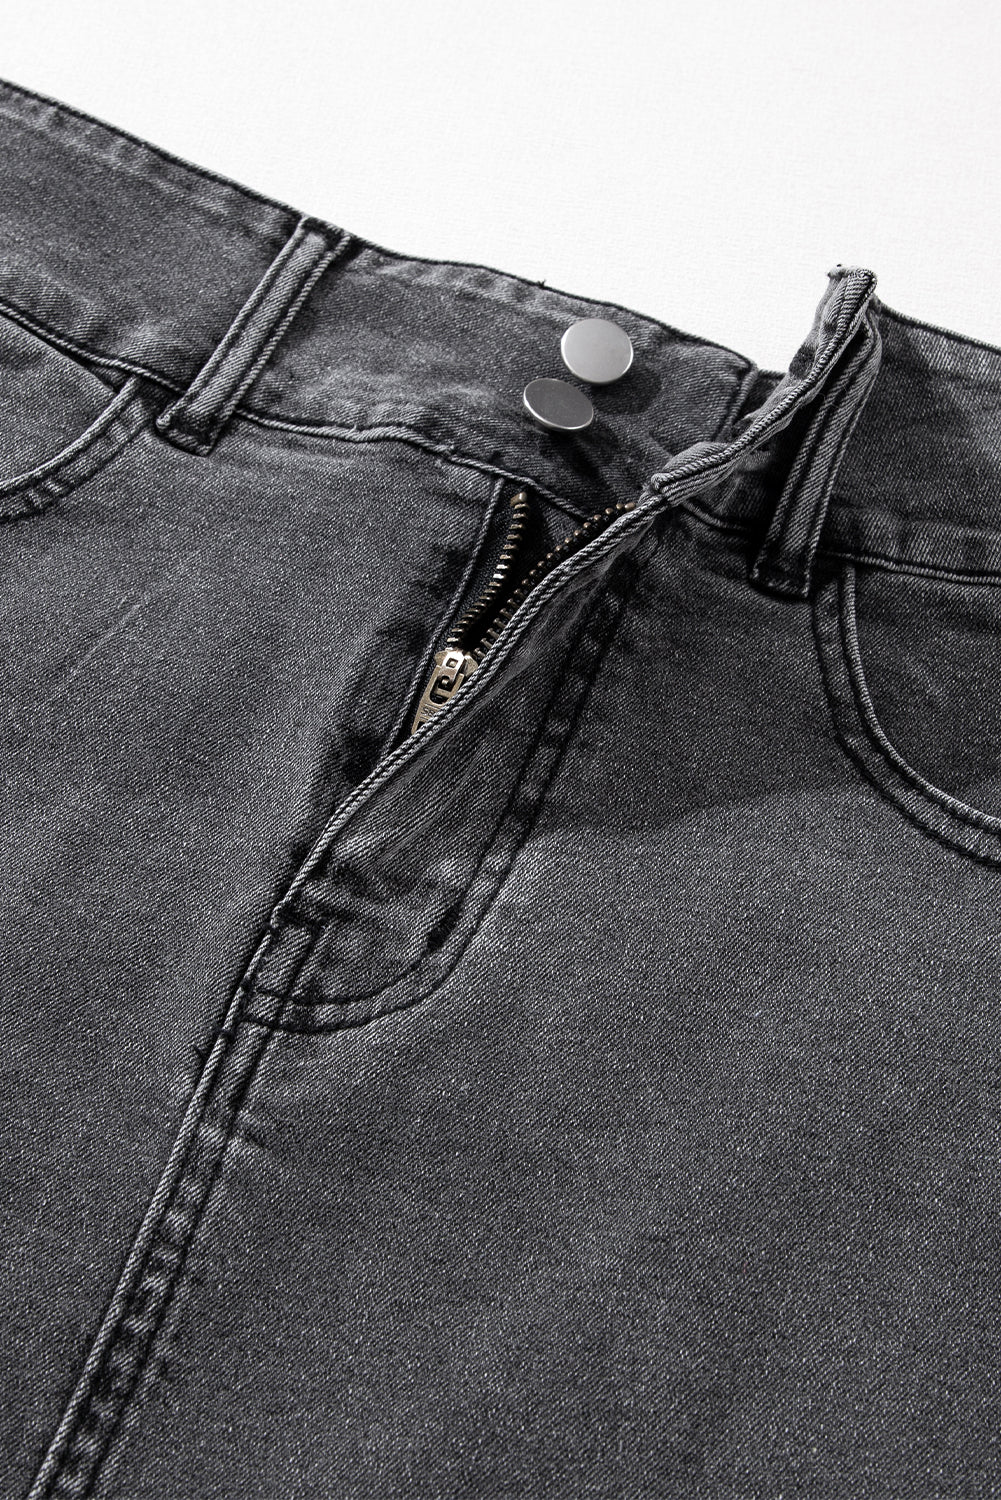 Black Raw Edge Side Slits Buttoned Midi Denim Skirt